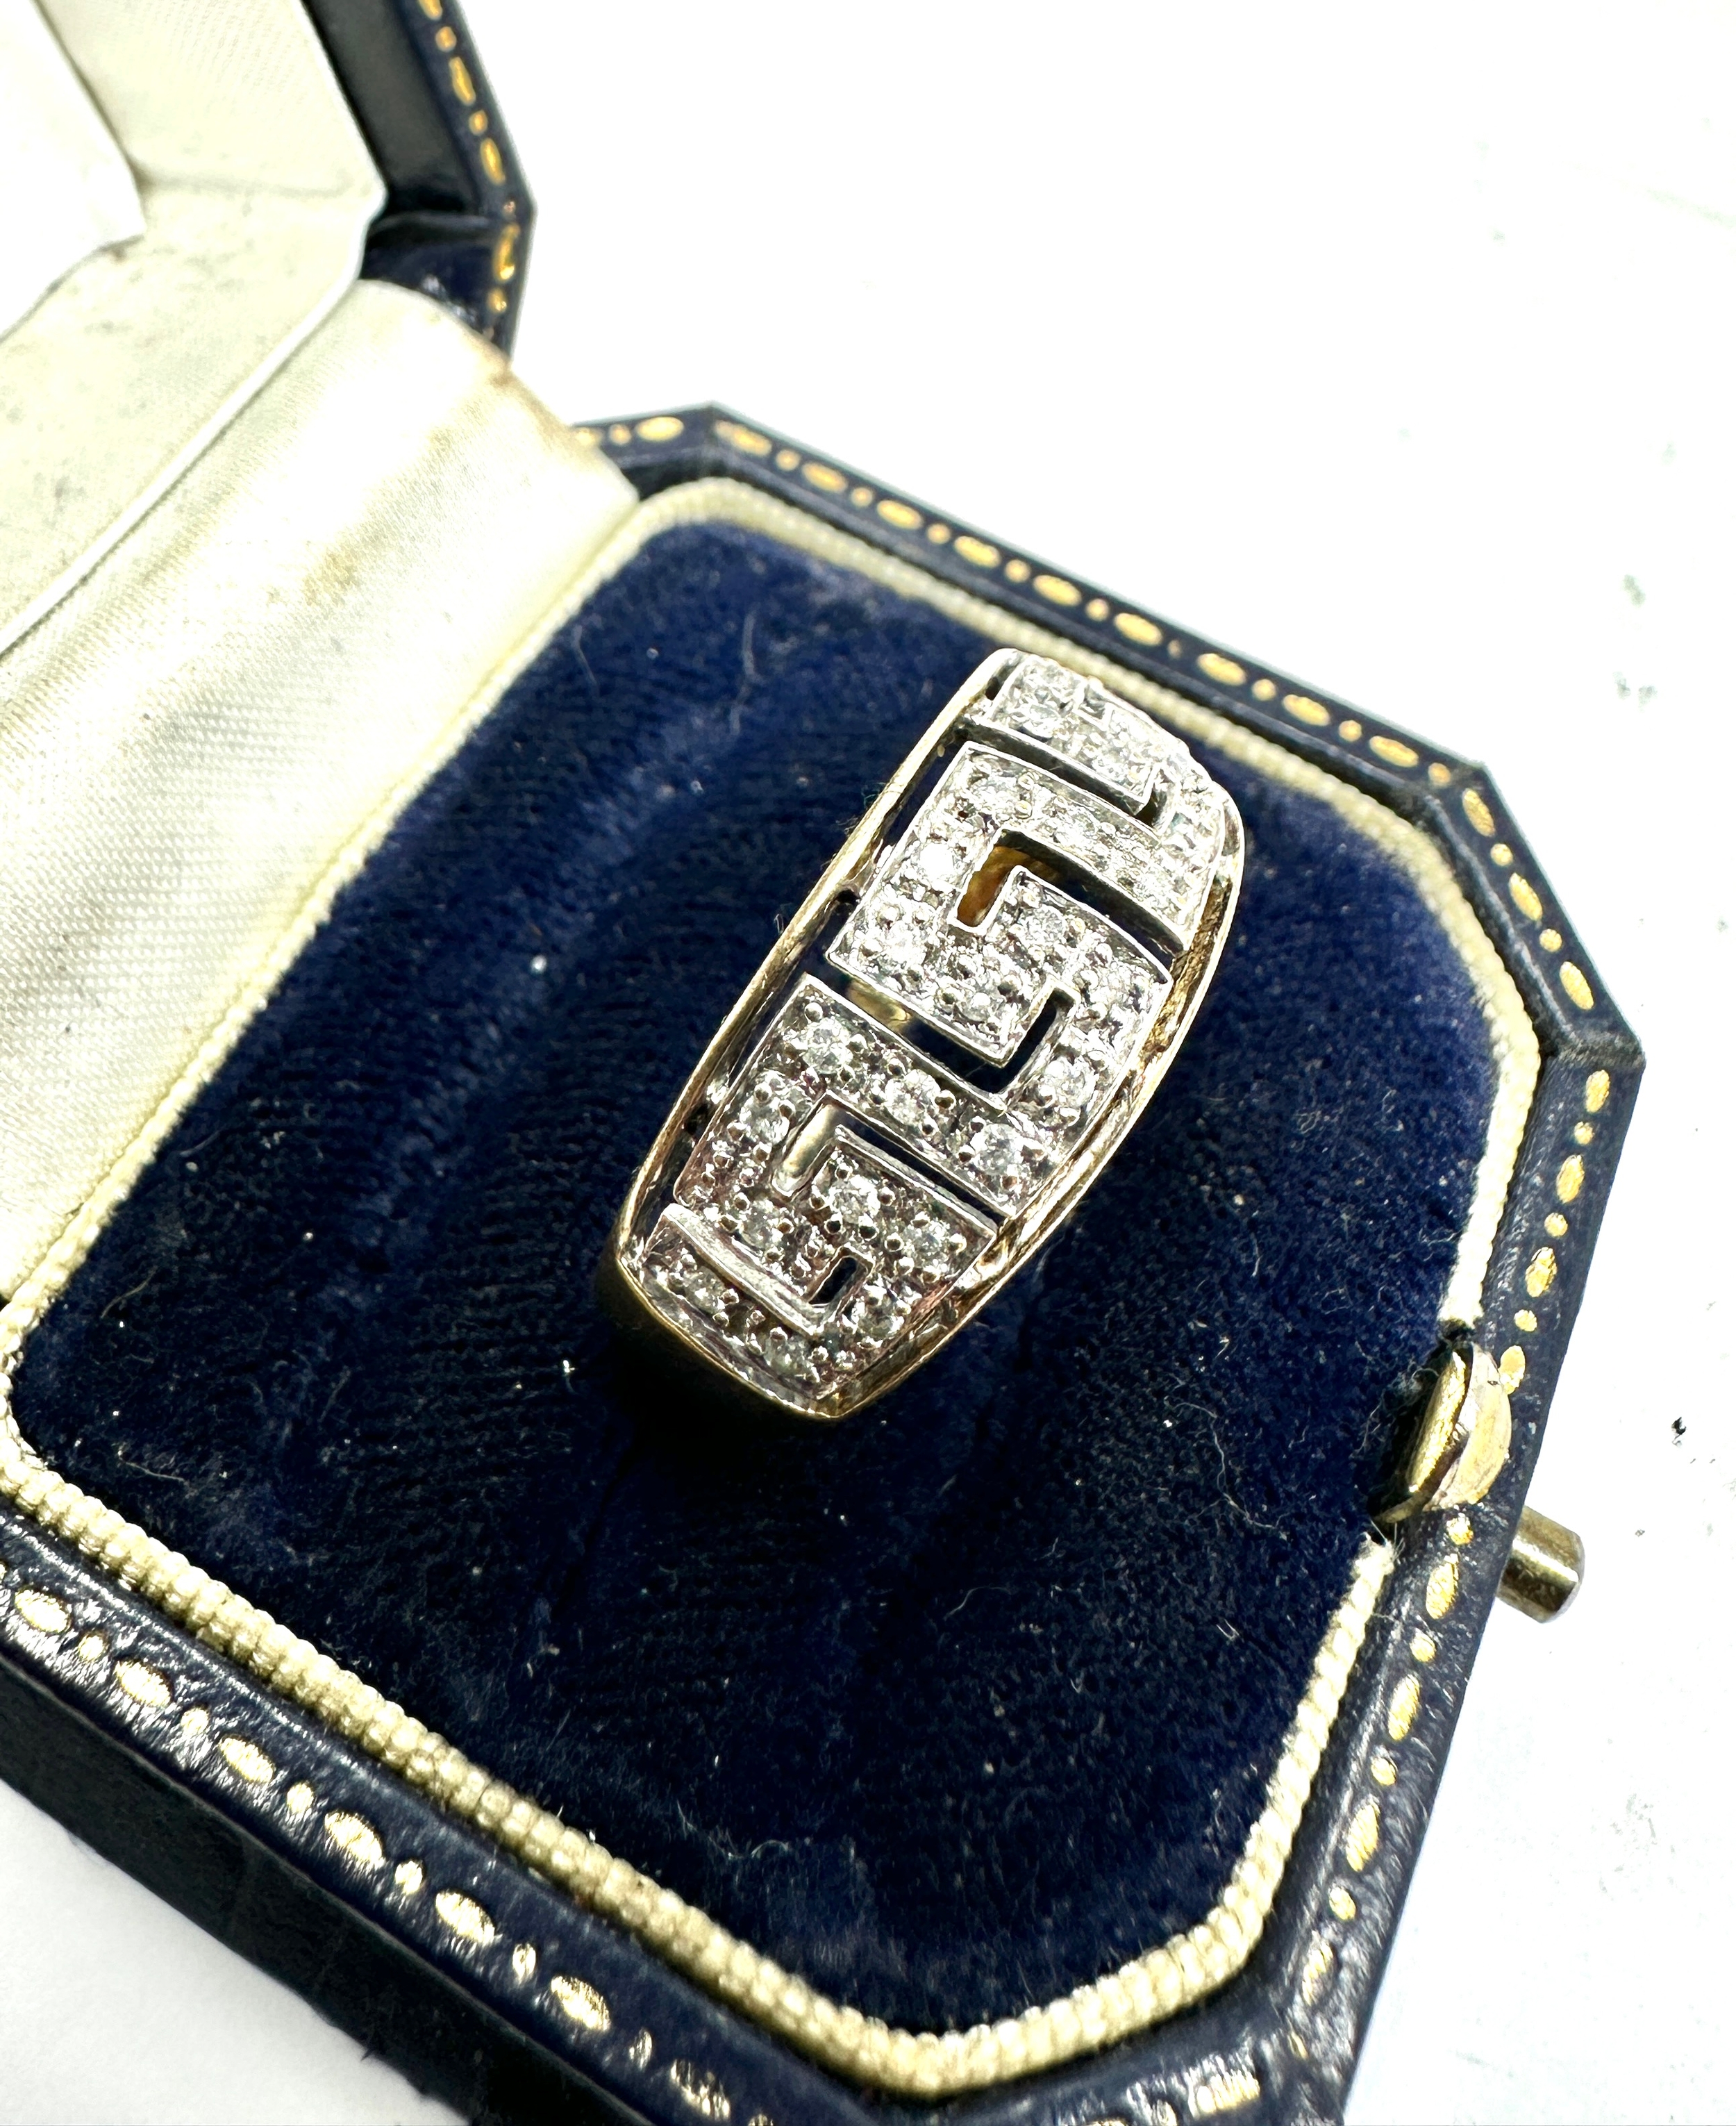 9ct gold diamond ring weight 3.5g - Image 2 of 4